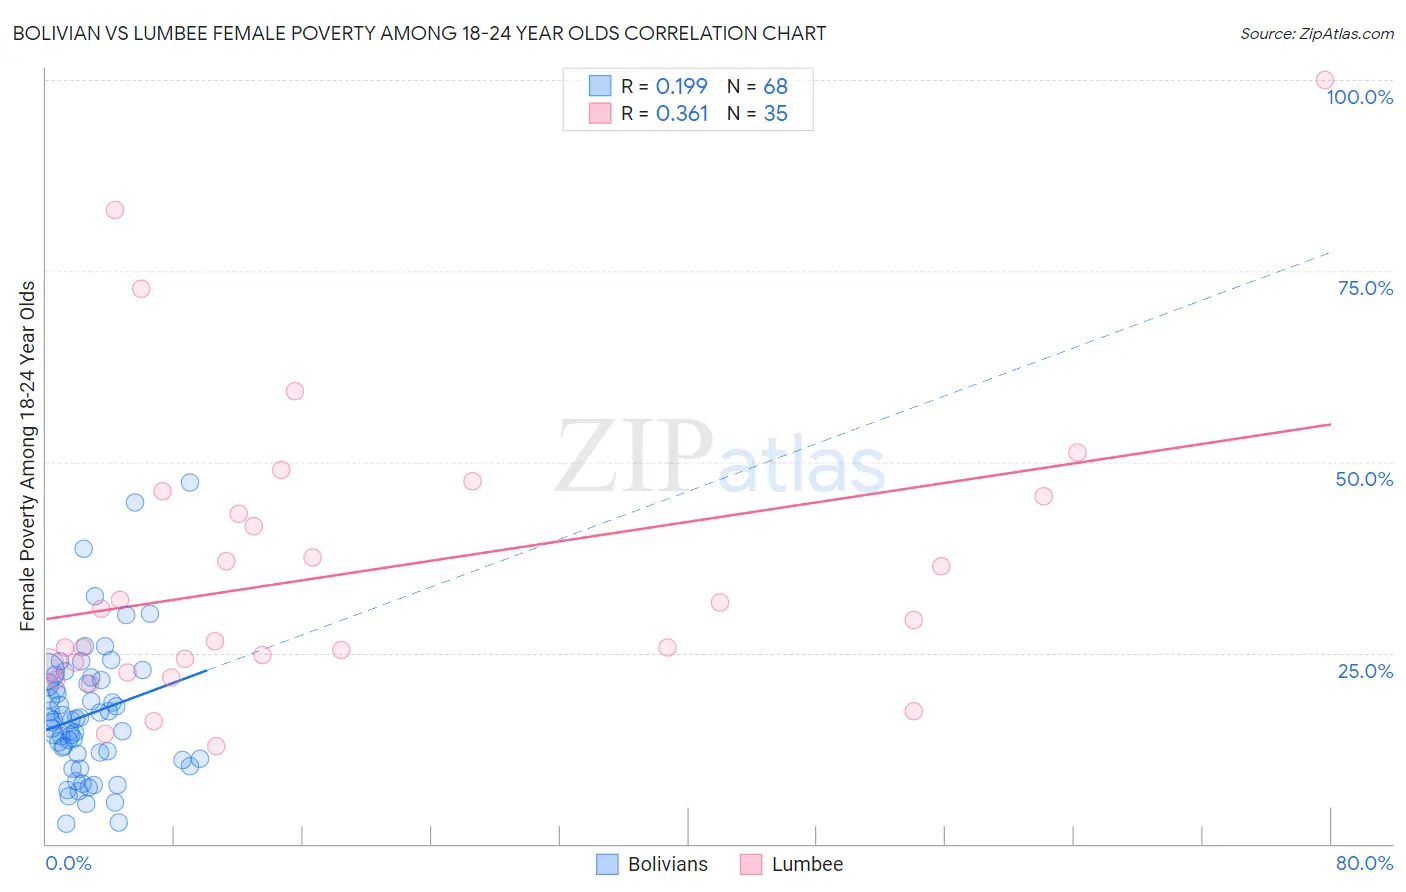 Bolivian vs Lumbee Female Poverty Among 18-24 Year Olds